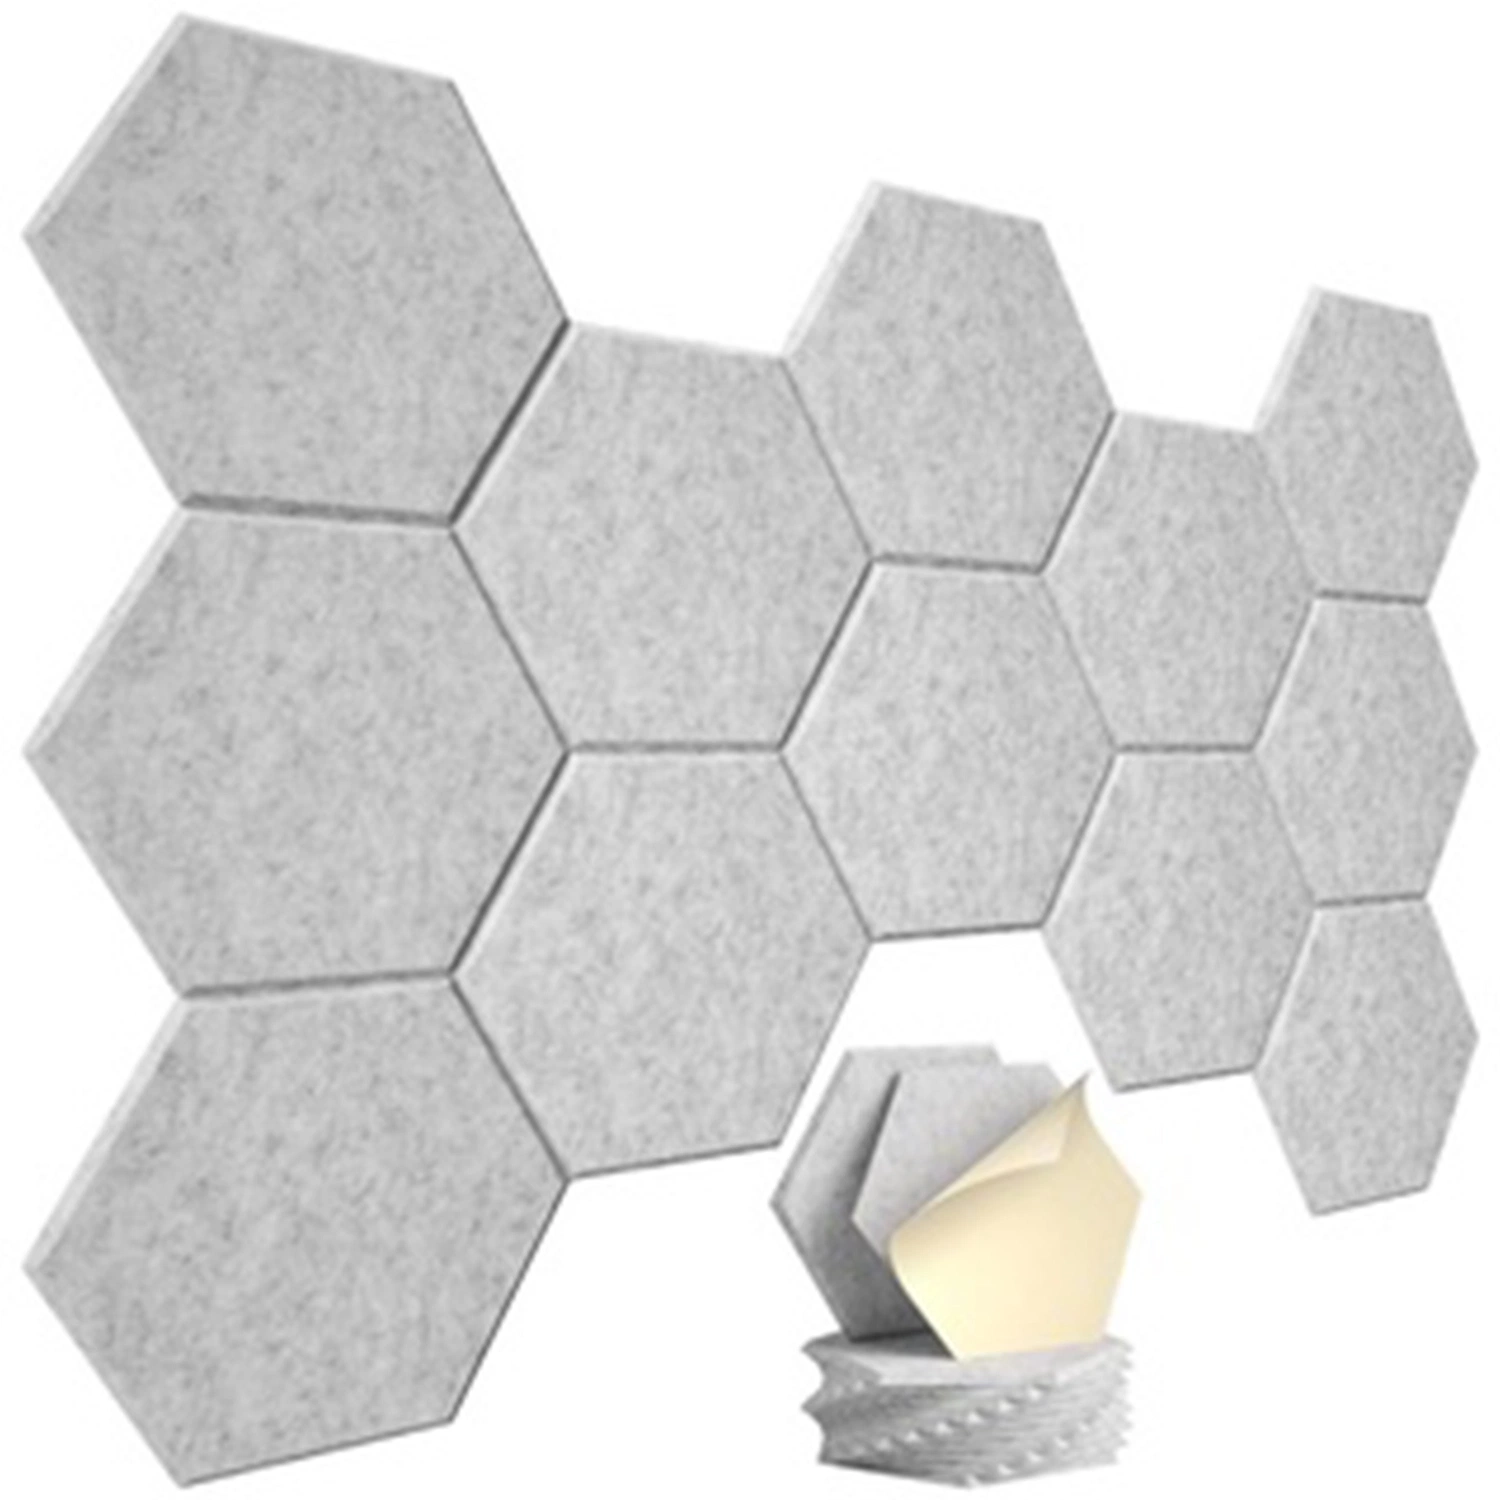 European Cost-Effective Hexagonal Sound-Absorbing Panel Sound-Absorbing Wall Panel Decorative Sound-Proof Wall Pad